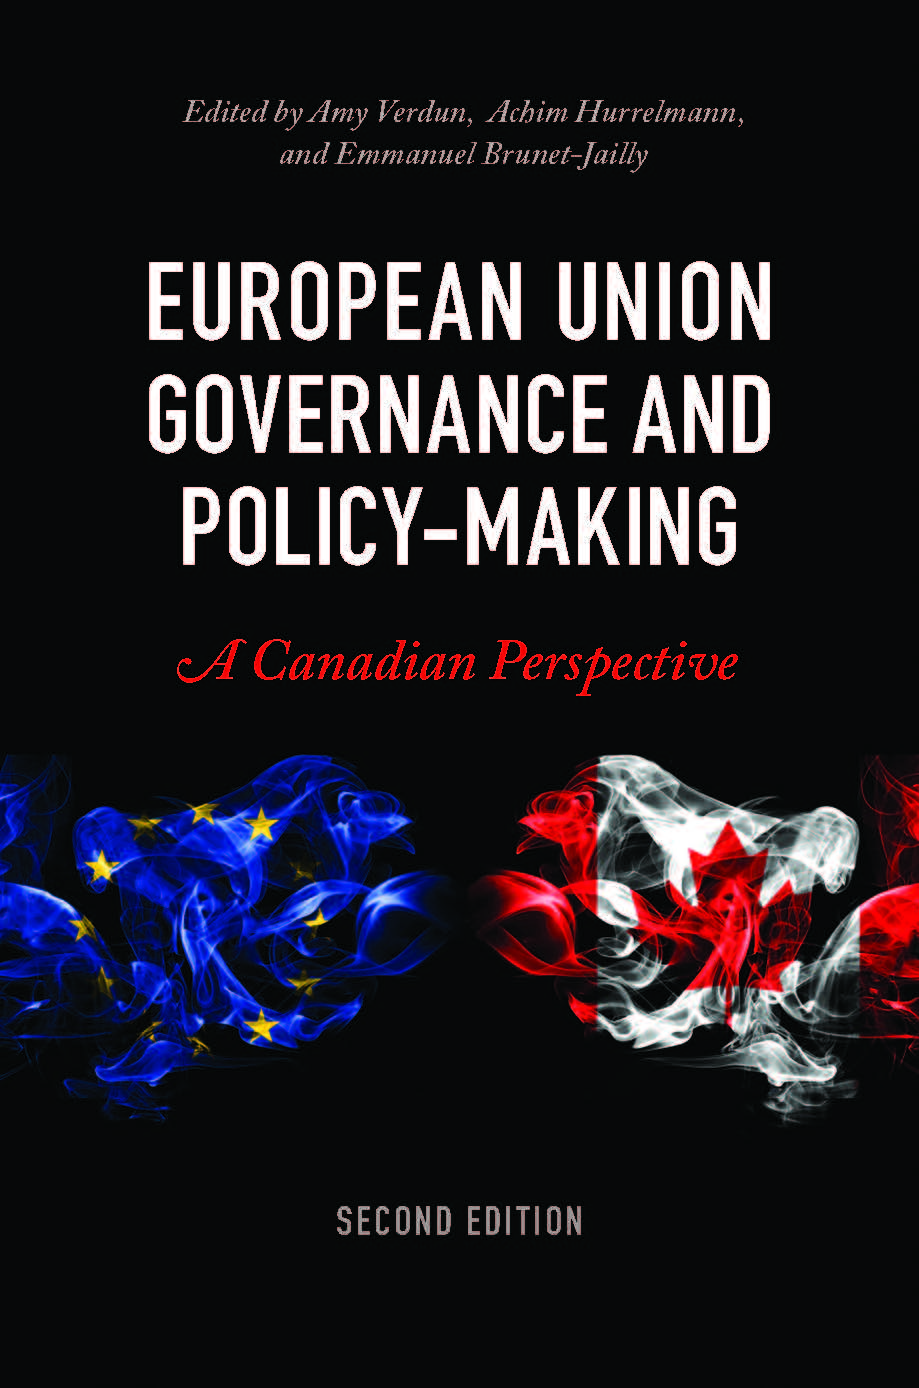 EURUS faculty member Achim Hurrelmann is one of the editors of a new textbook on European Union politics